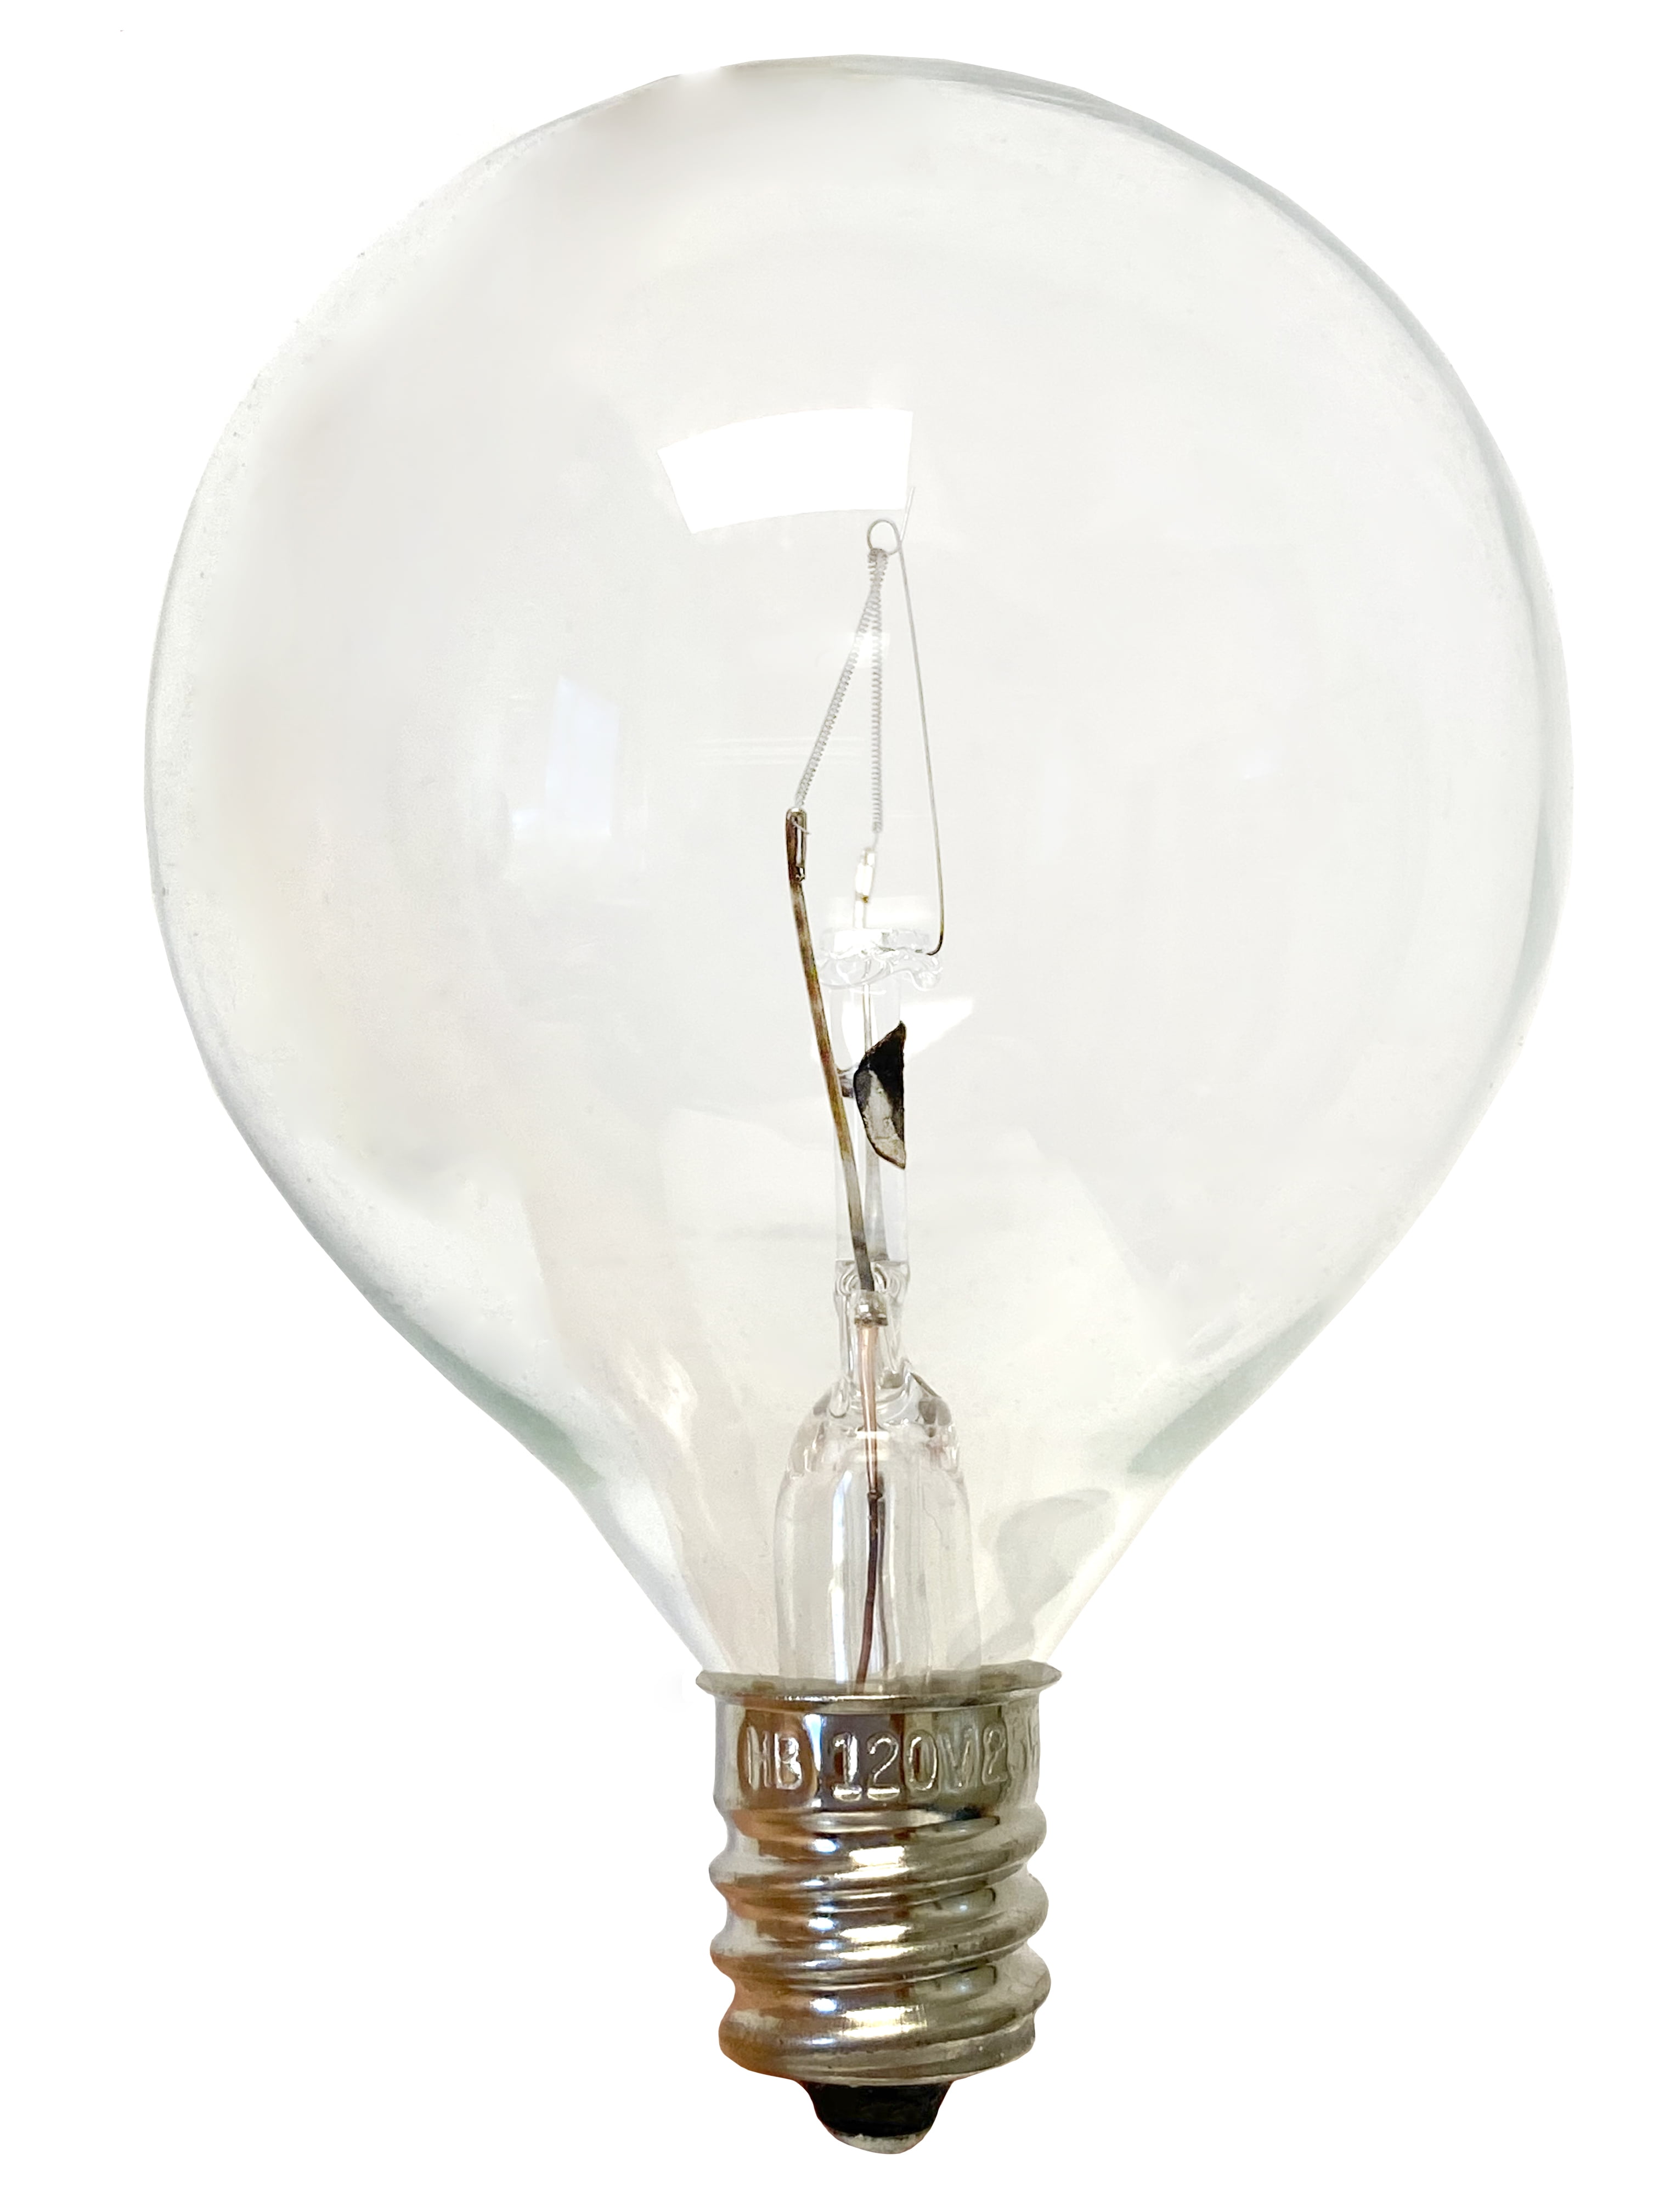 2 Pack Light Bulb for Large Scentsy Wax Diffusers/Tart Warmers, 25 Watt 130  Volt 